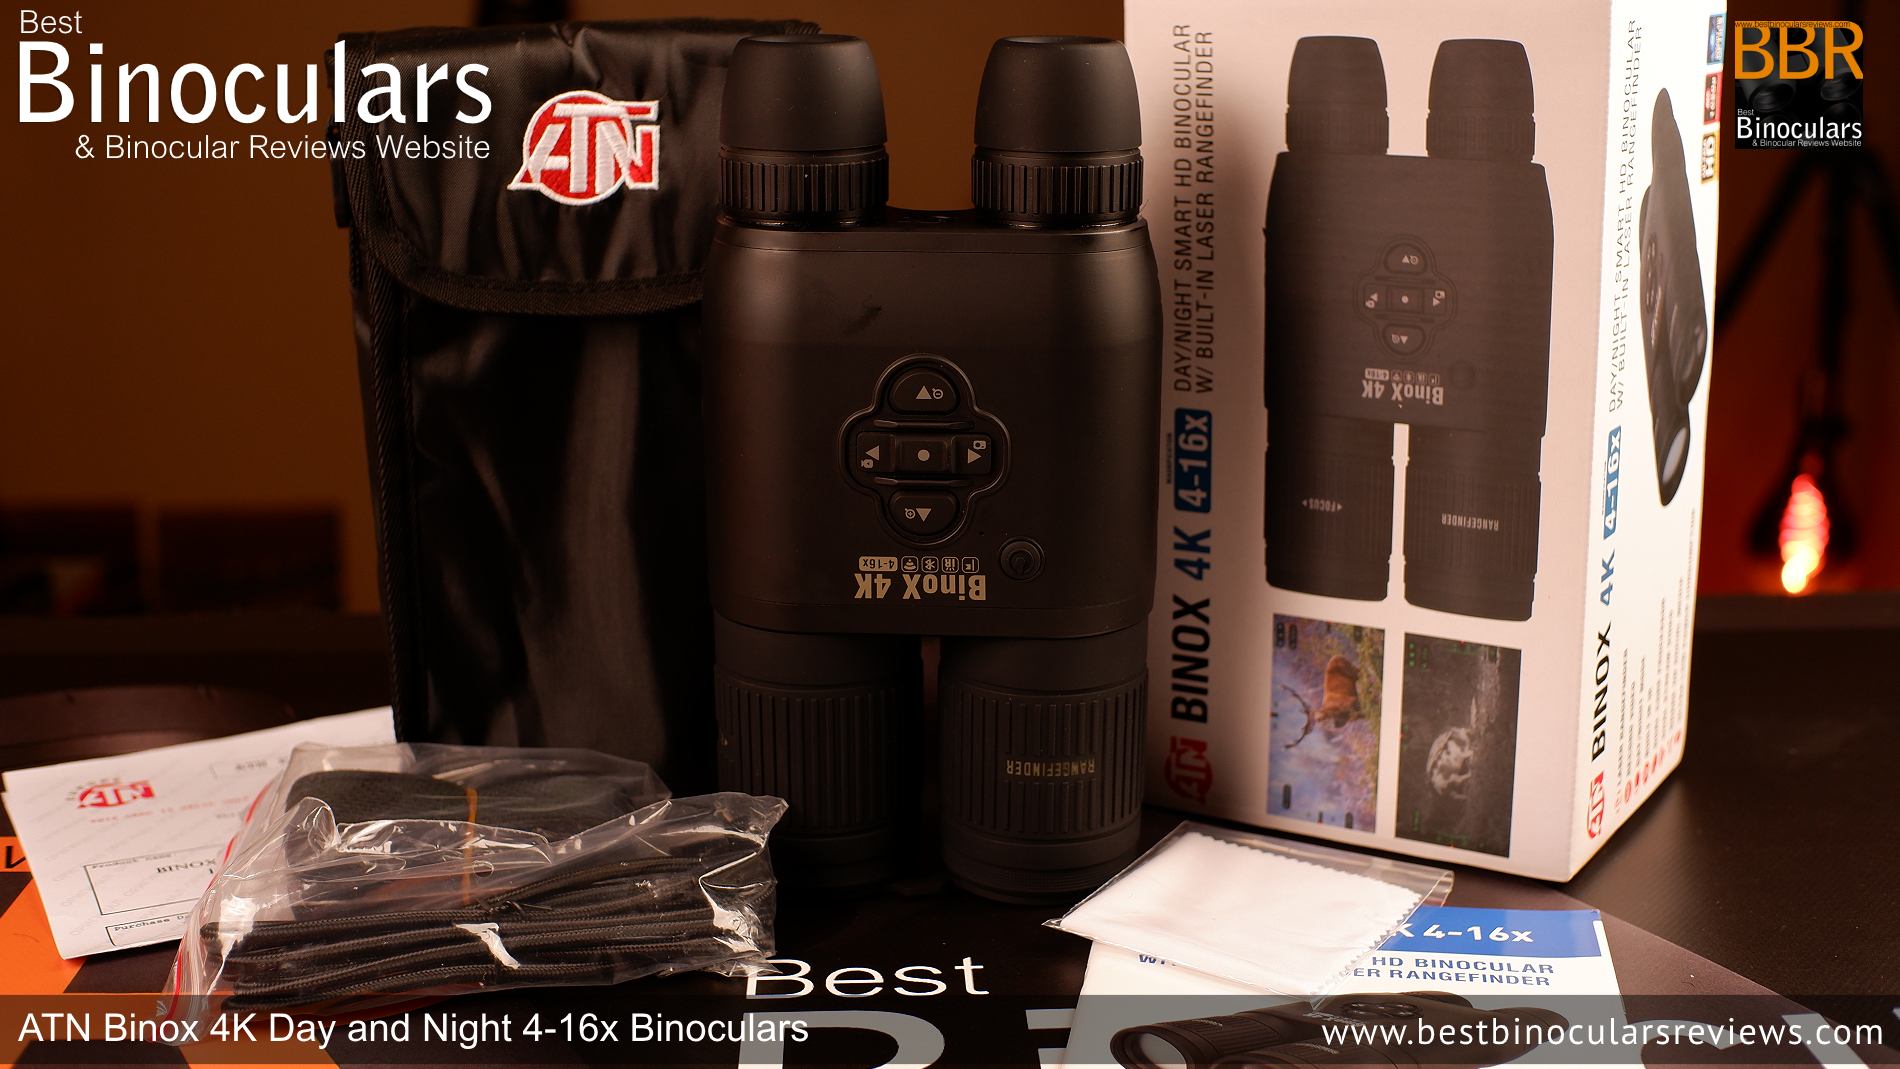 ATN Binox 4K Day and Night 4-16x Binoculars with Box and Accessories